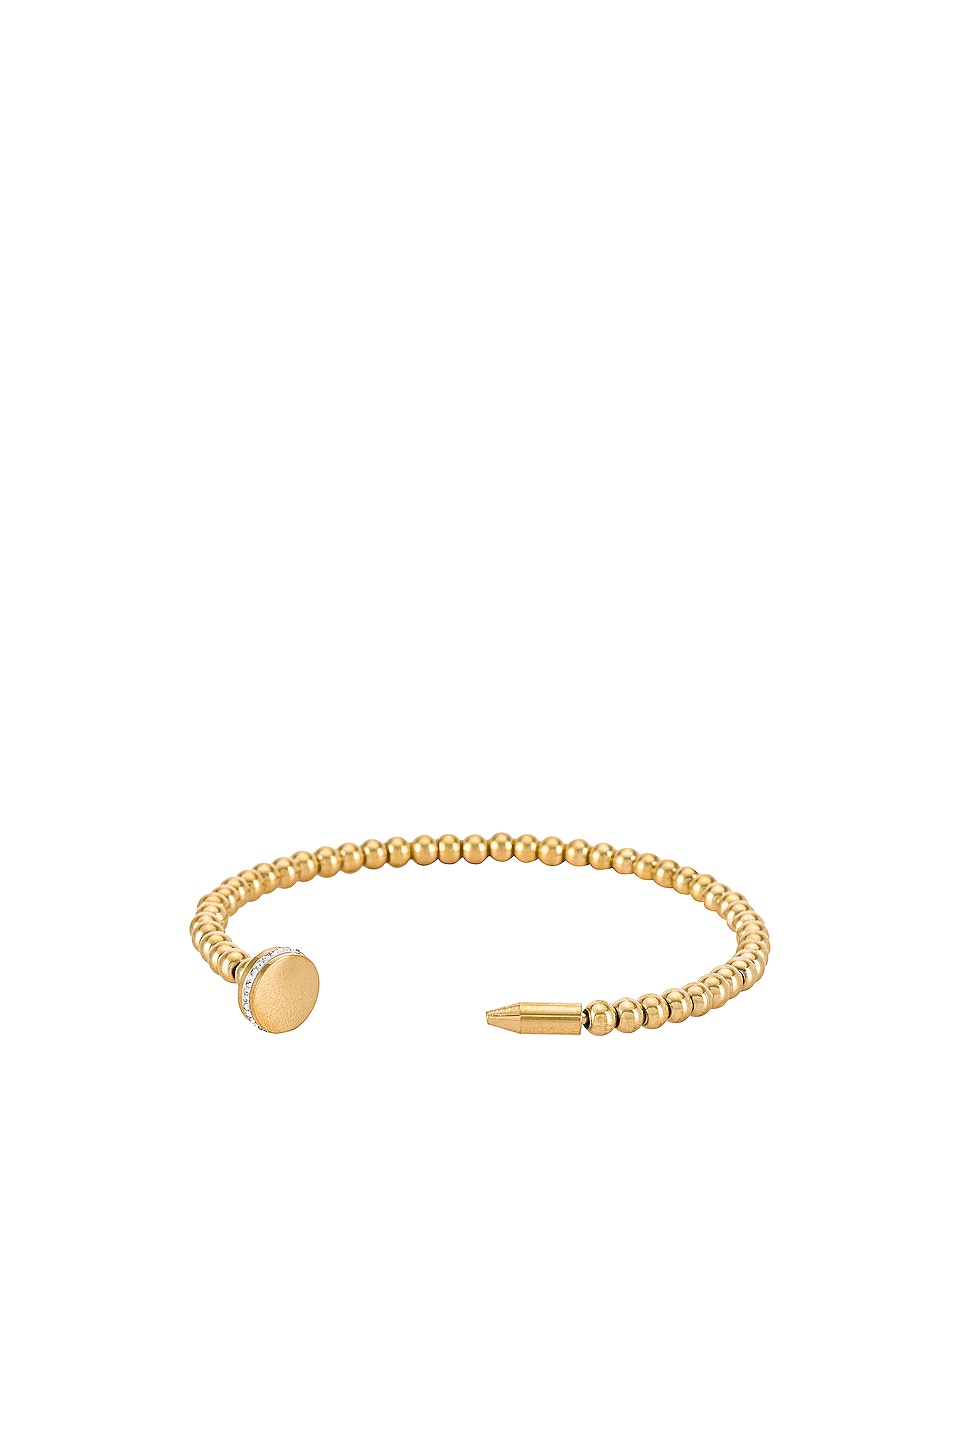 Roma Nail Cuff Bracelet in Gold 